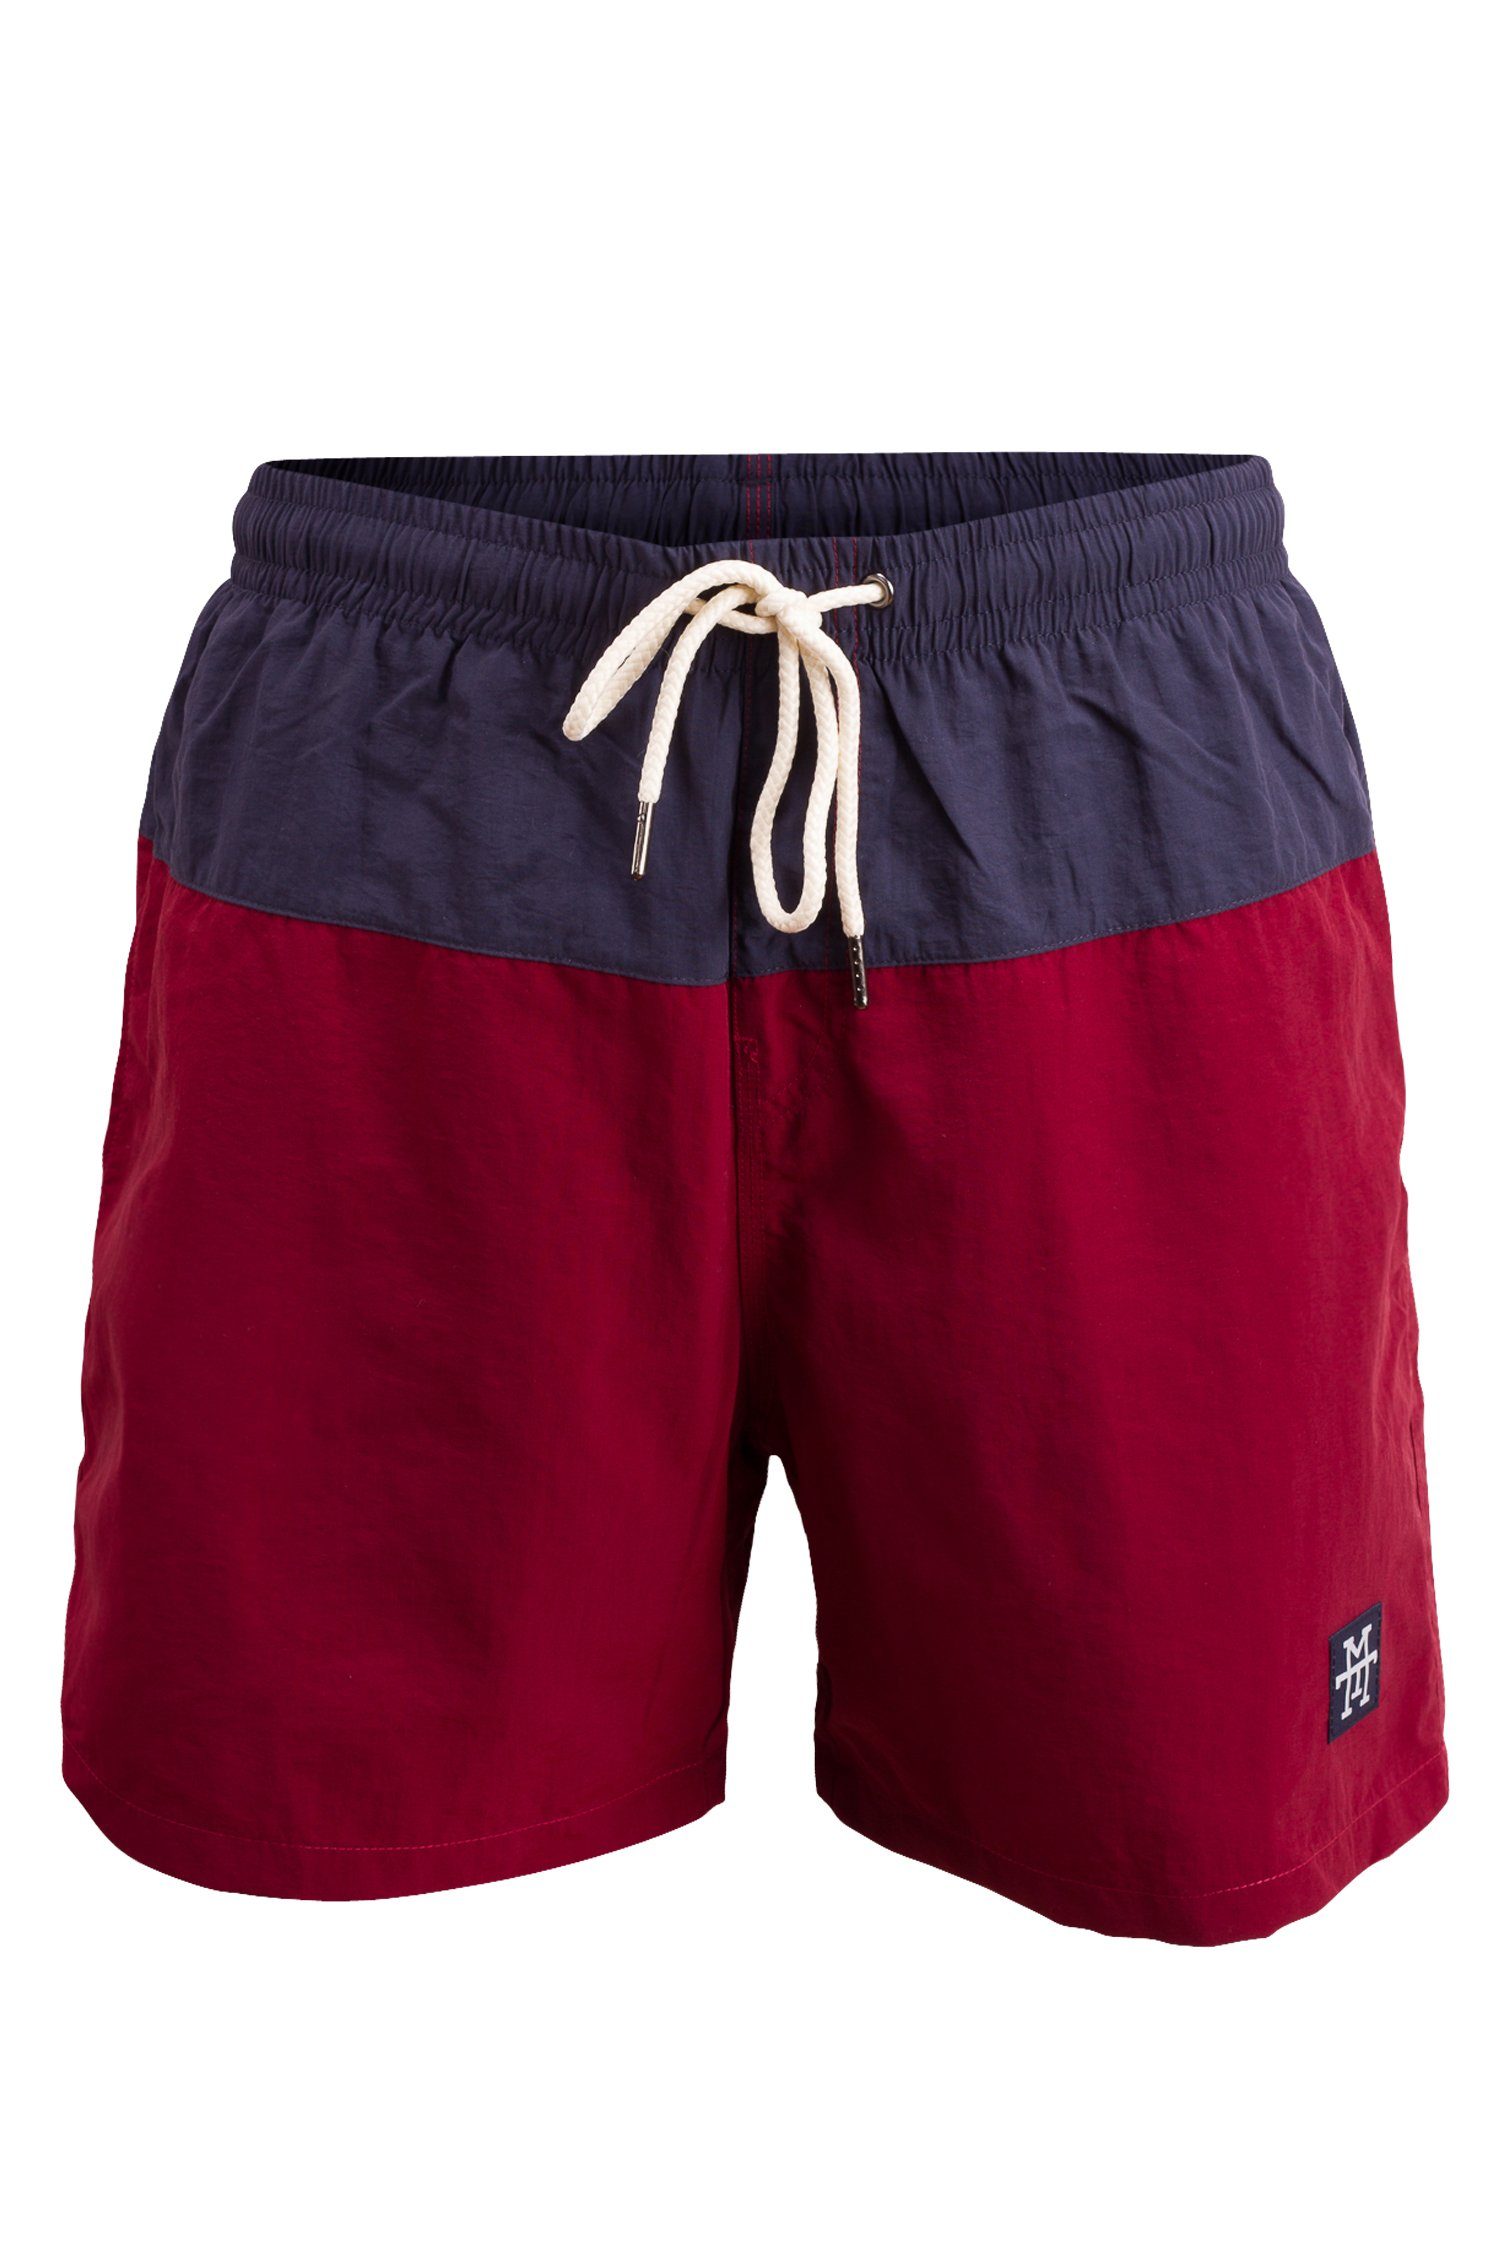 Badehosen Manufaktur13 Shorts Badeshorts schnelltrocknend Red/Navy Swim -